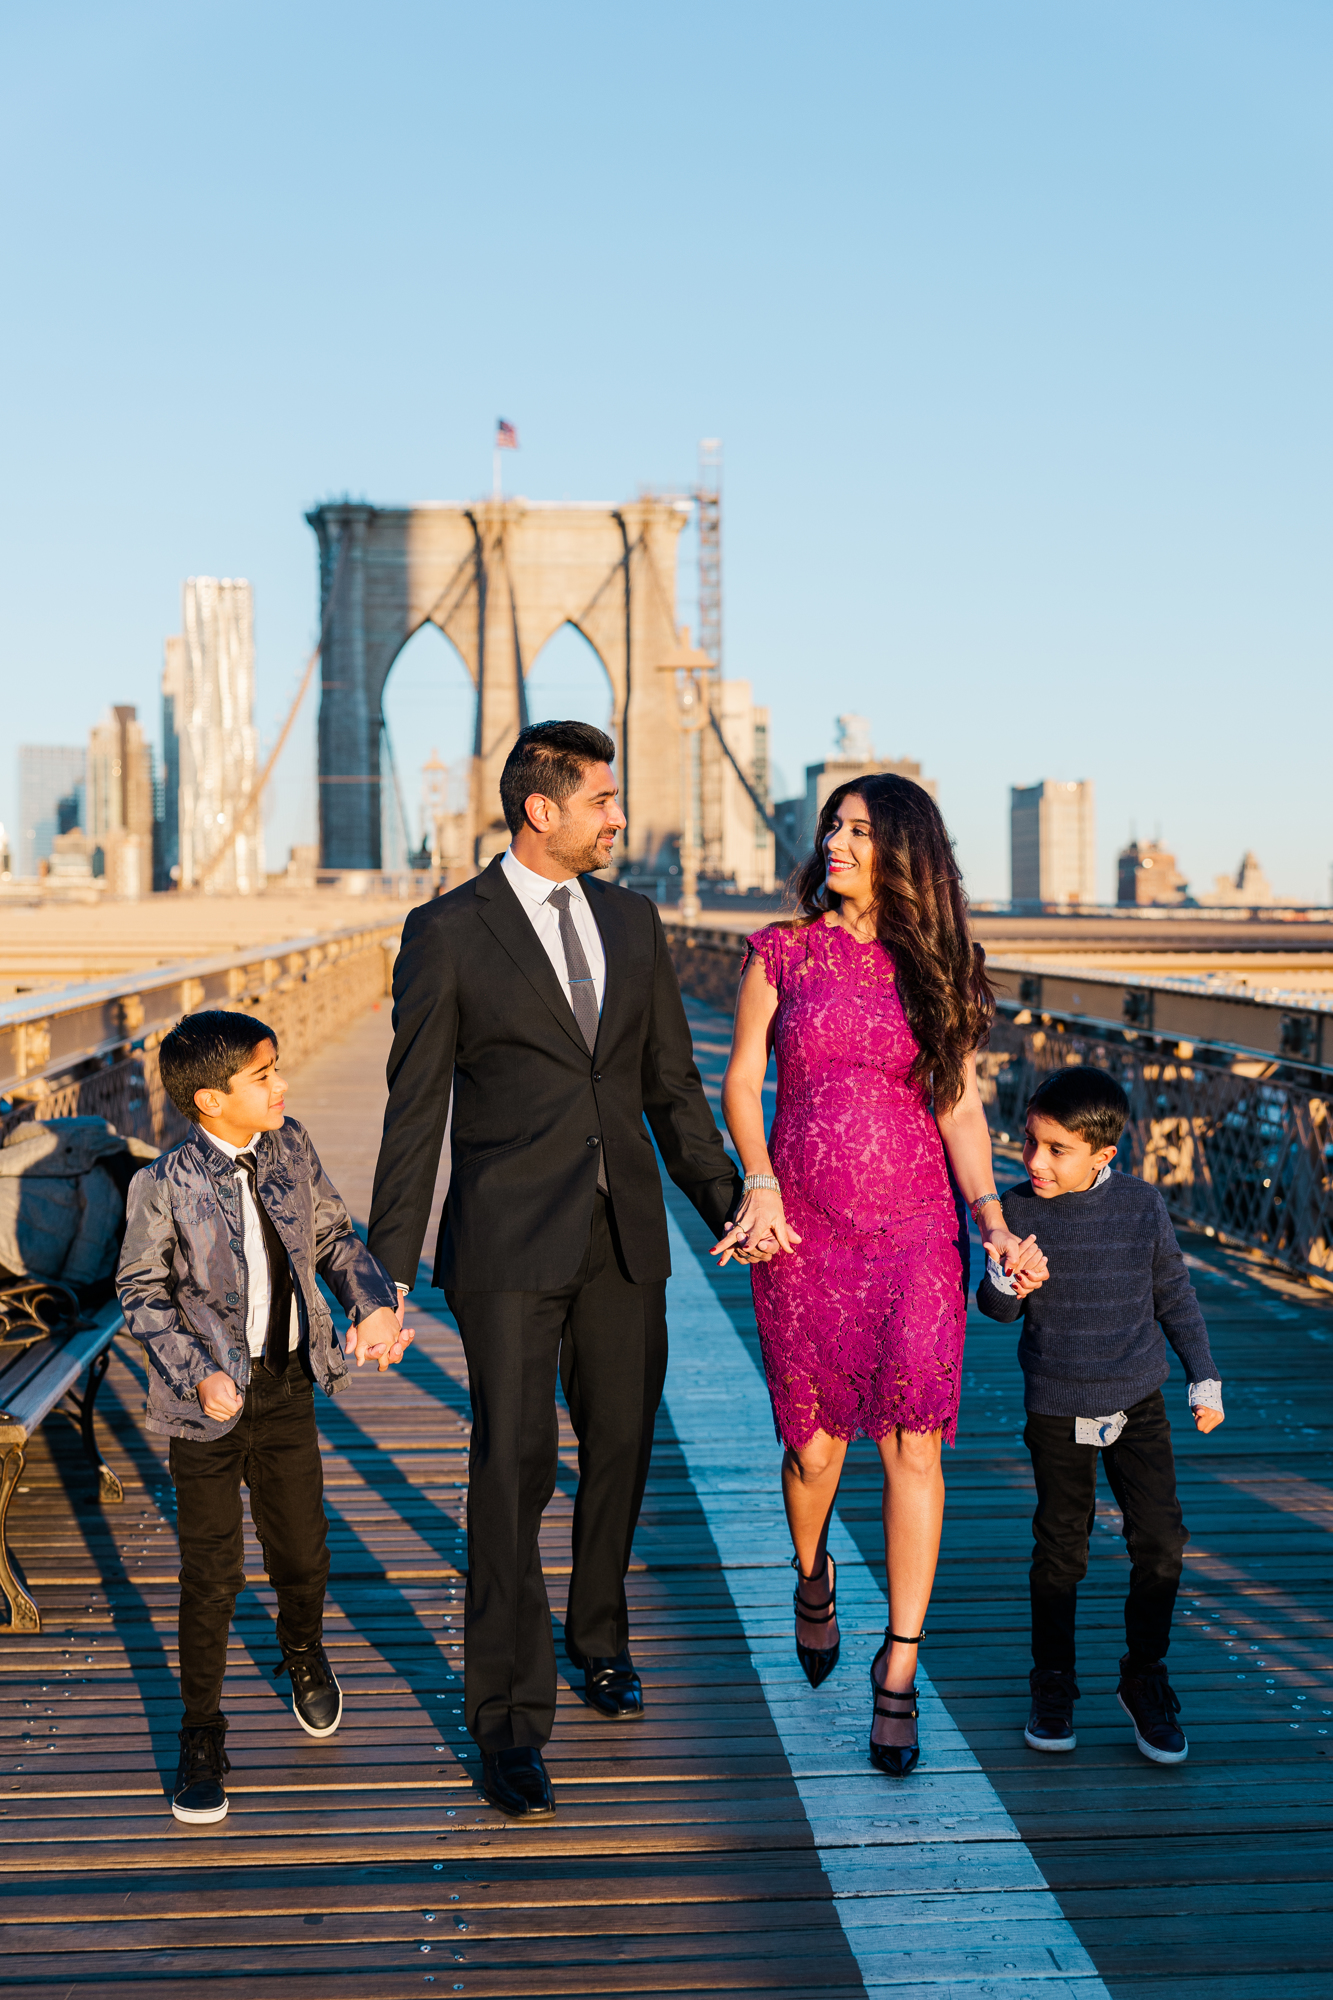 Pretty Family Photo Shoot on the Brooklyn Bridge